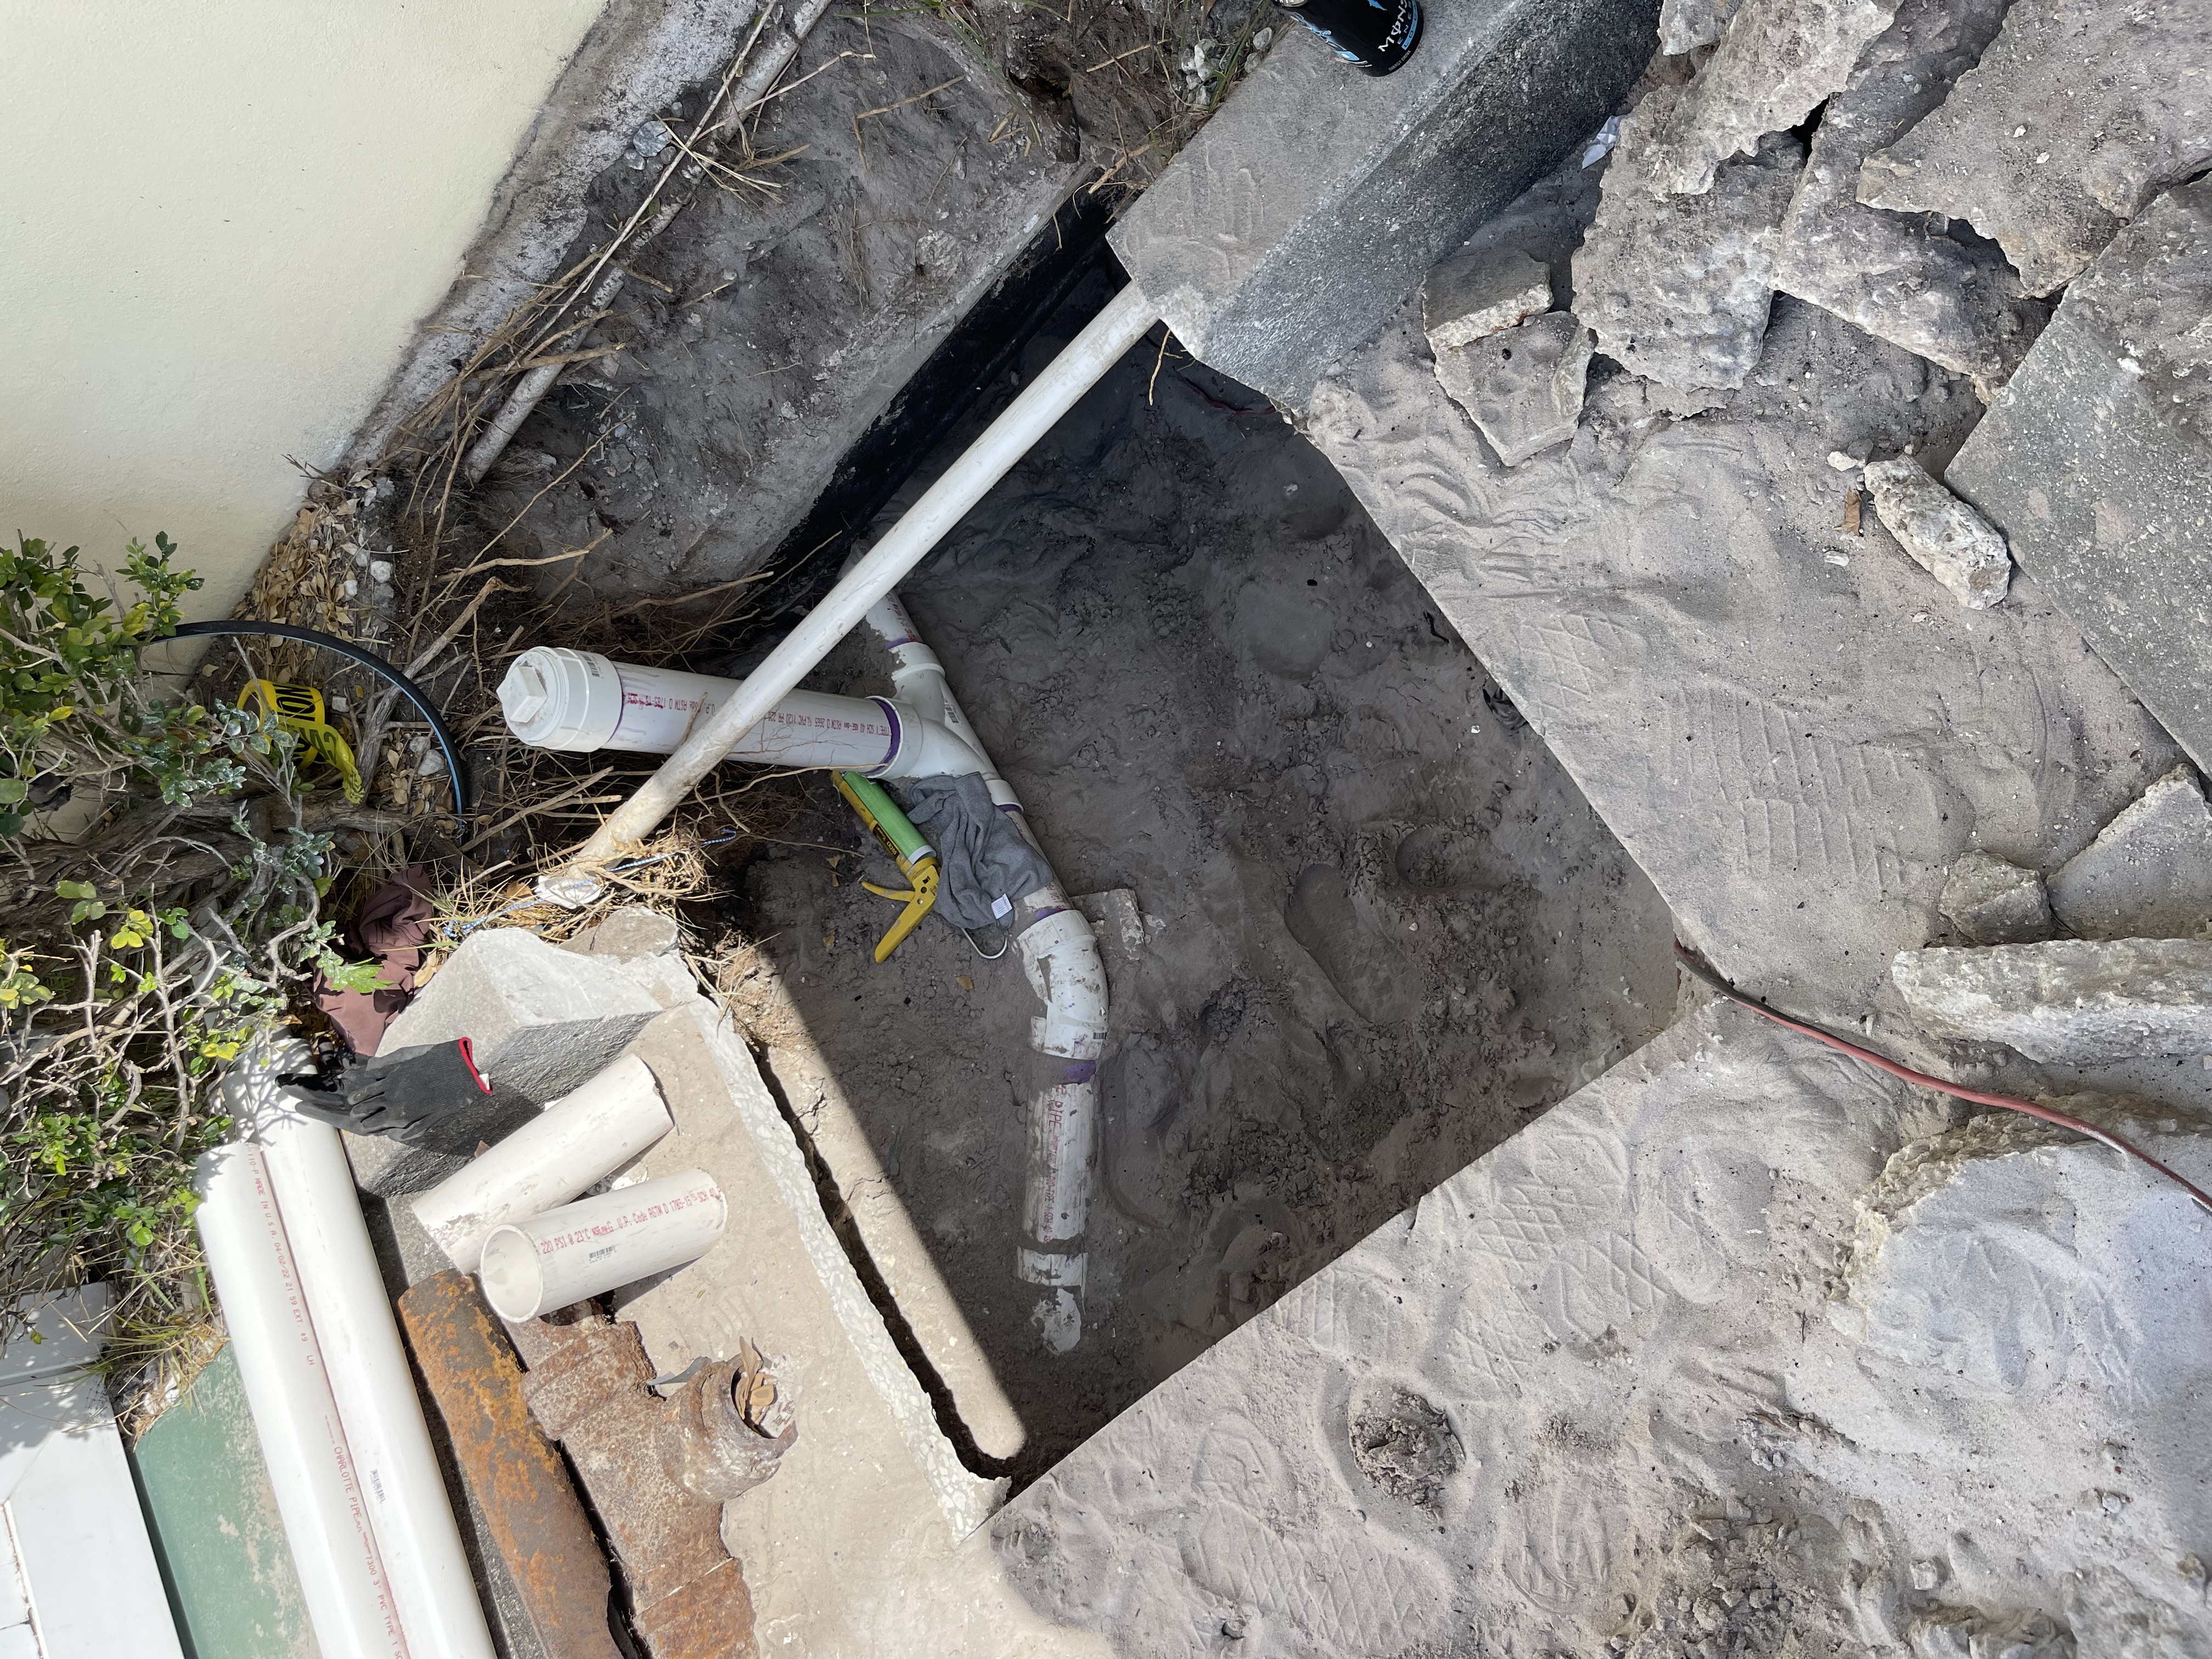 Sewer Repair in Miami - Latest Jobs -  Miami 305 Plumbing